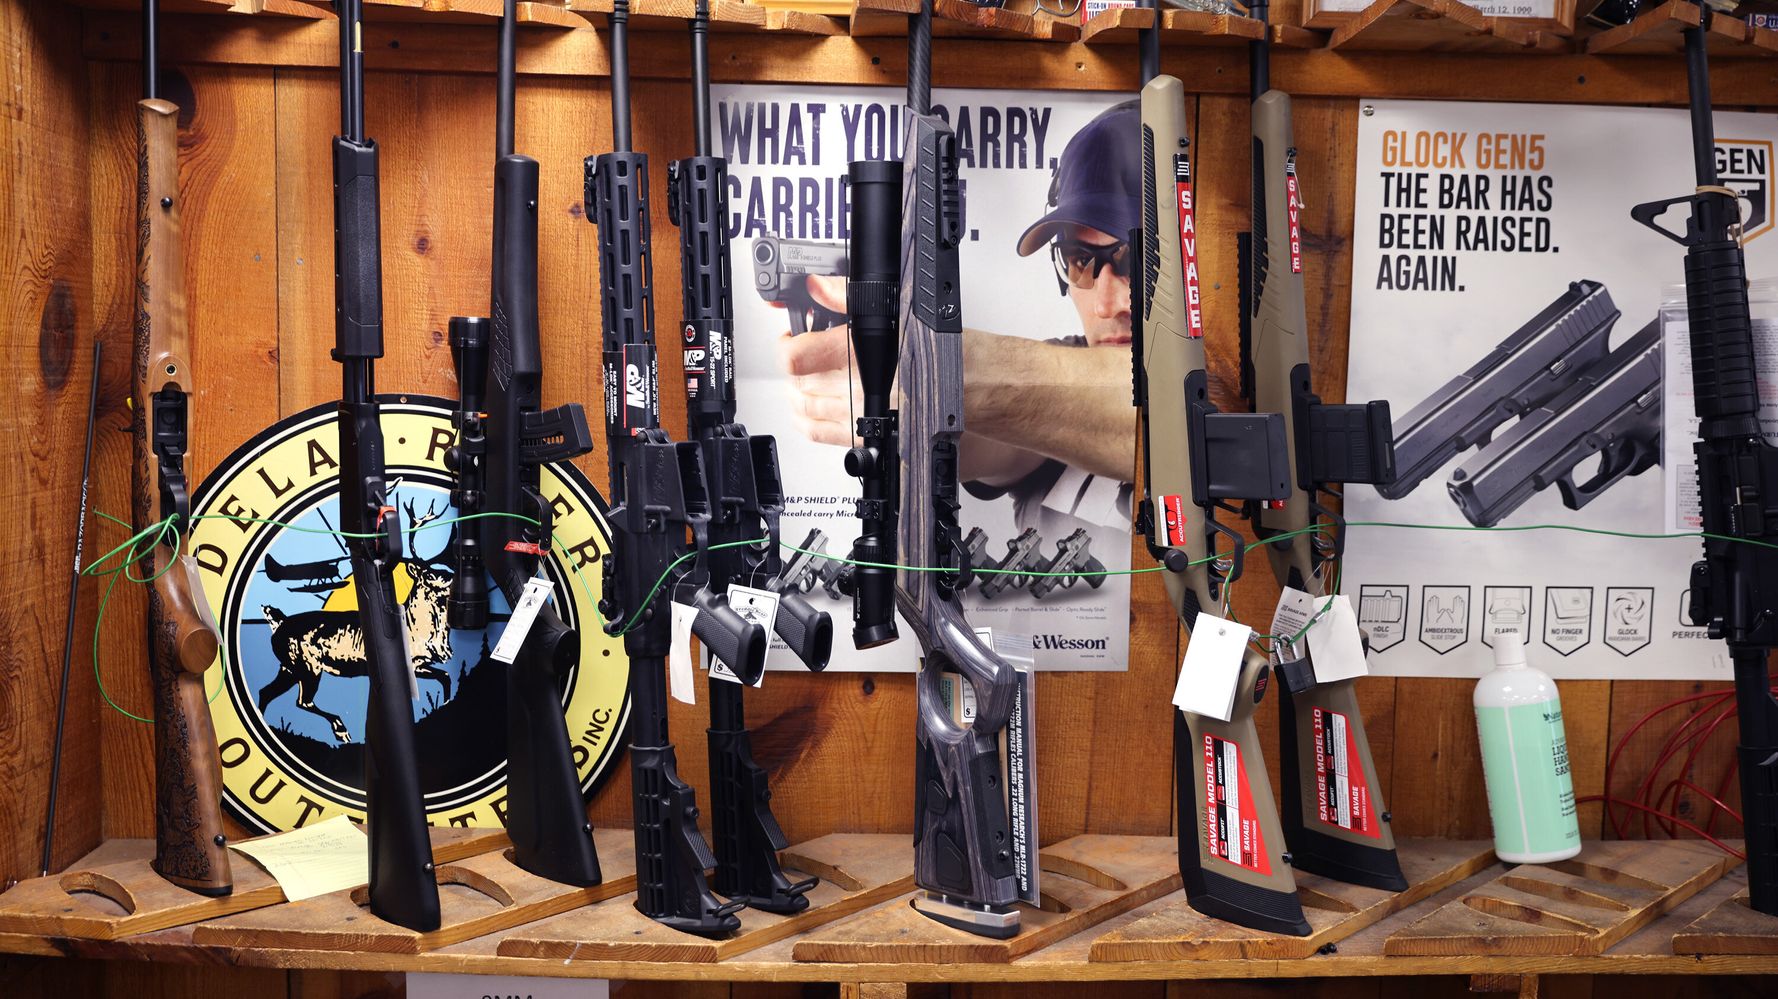 Background Checks Blocked A Record High 300,000 Gun Sales